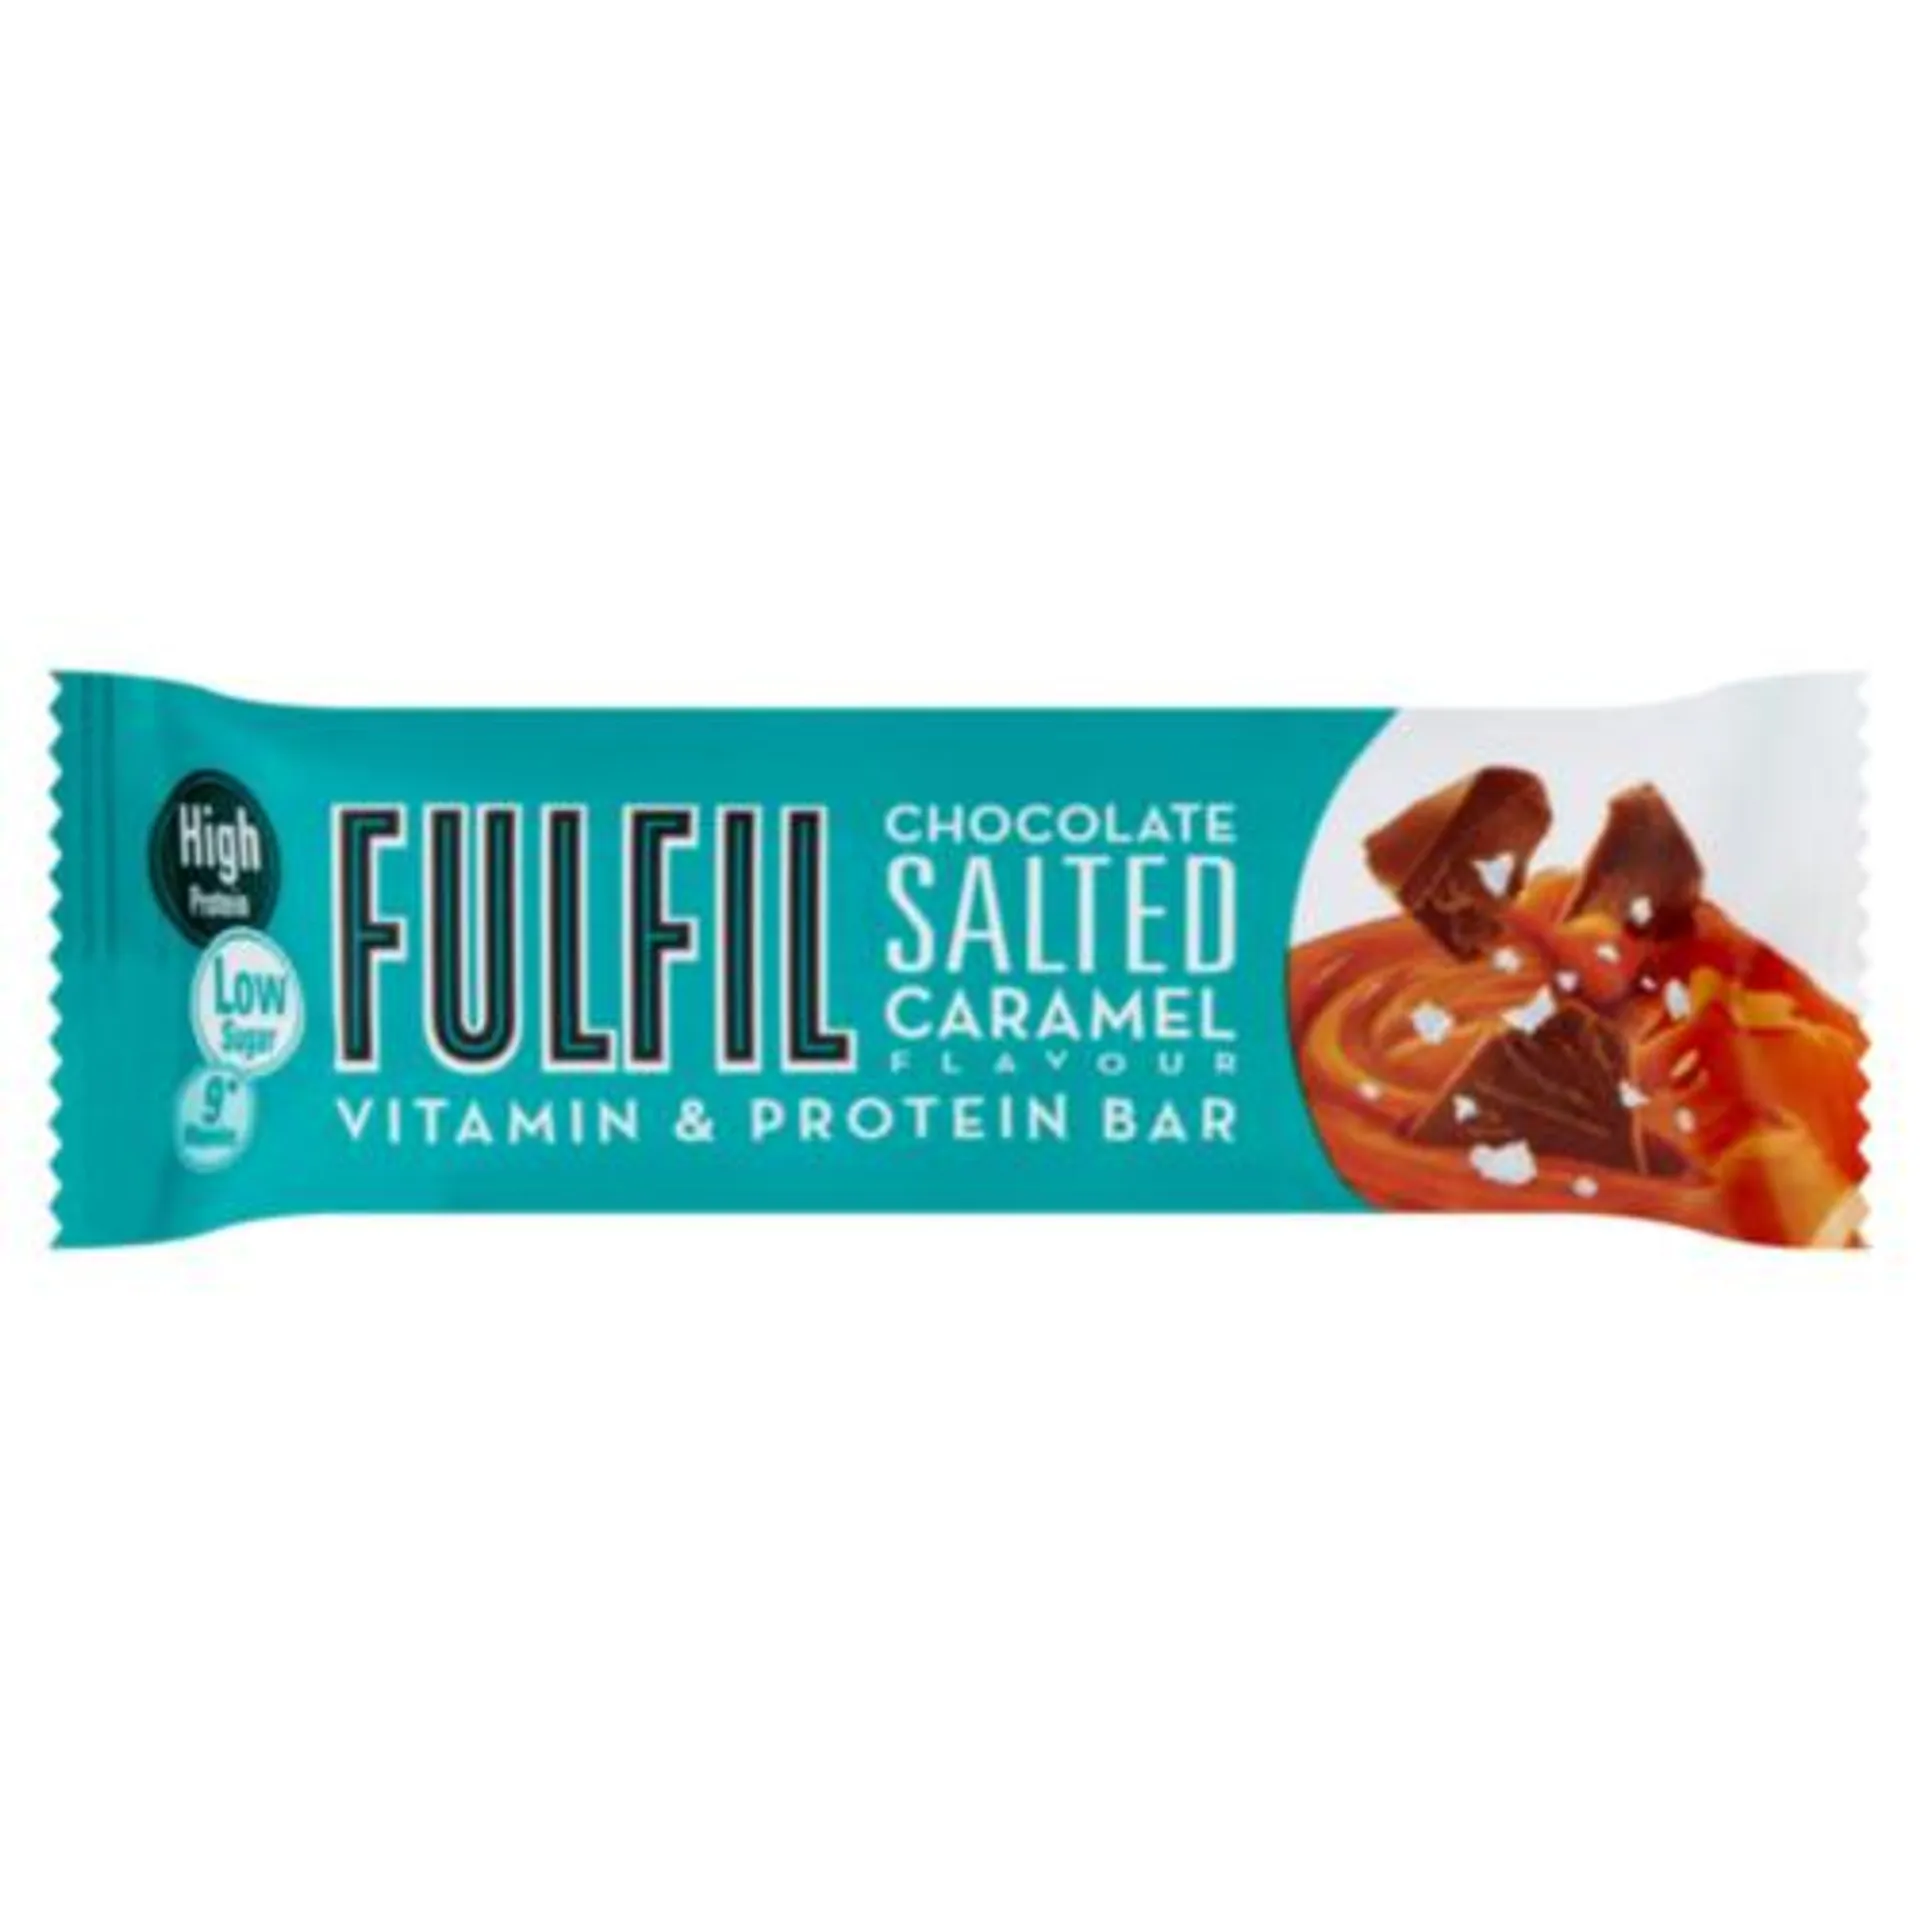 Fulfil Salted Caramel Vitamin & Protein Bar